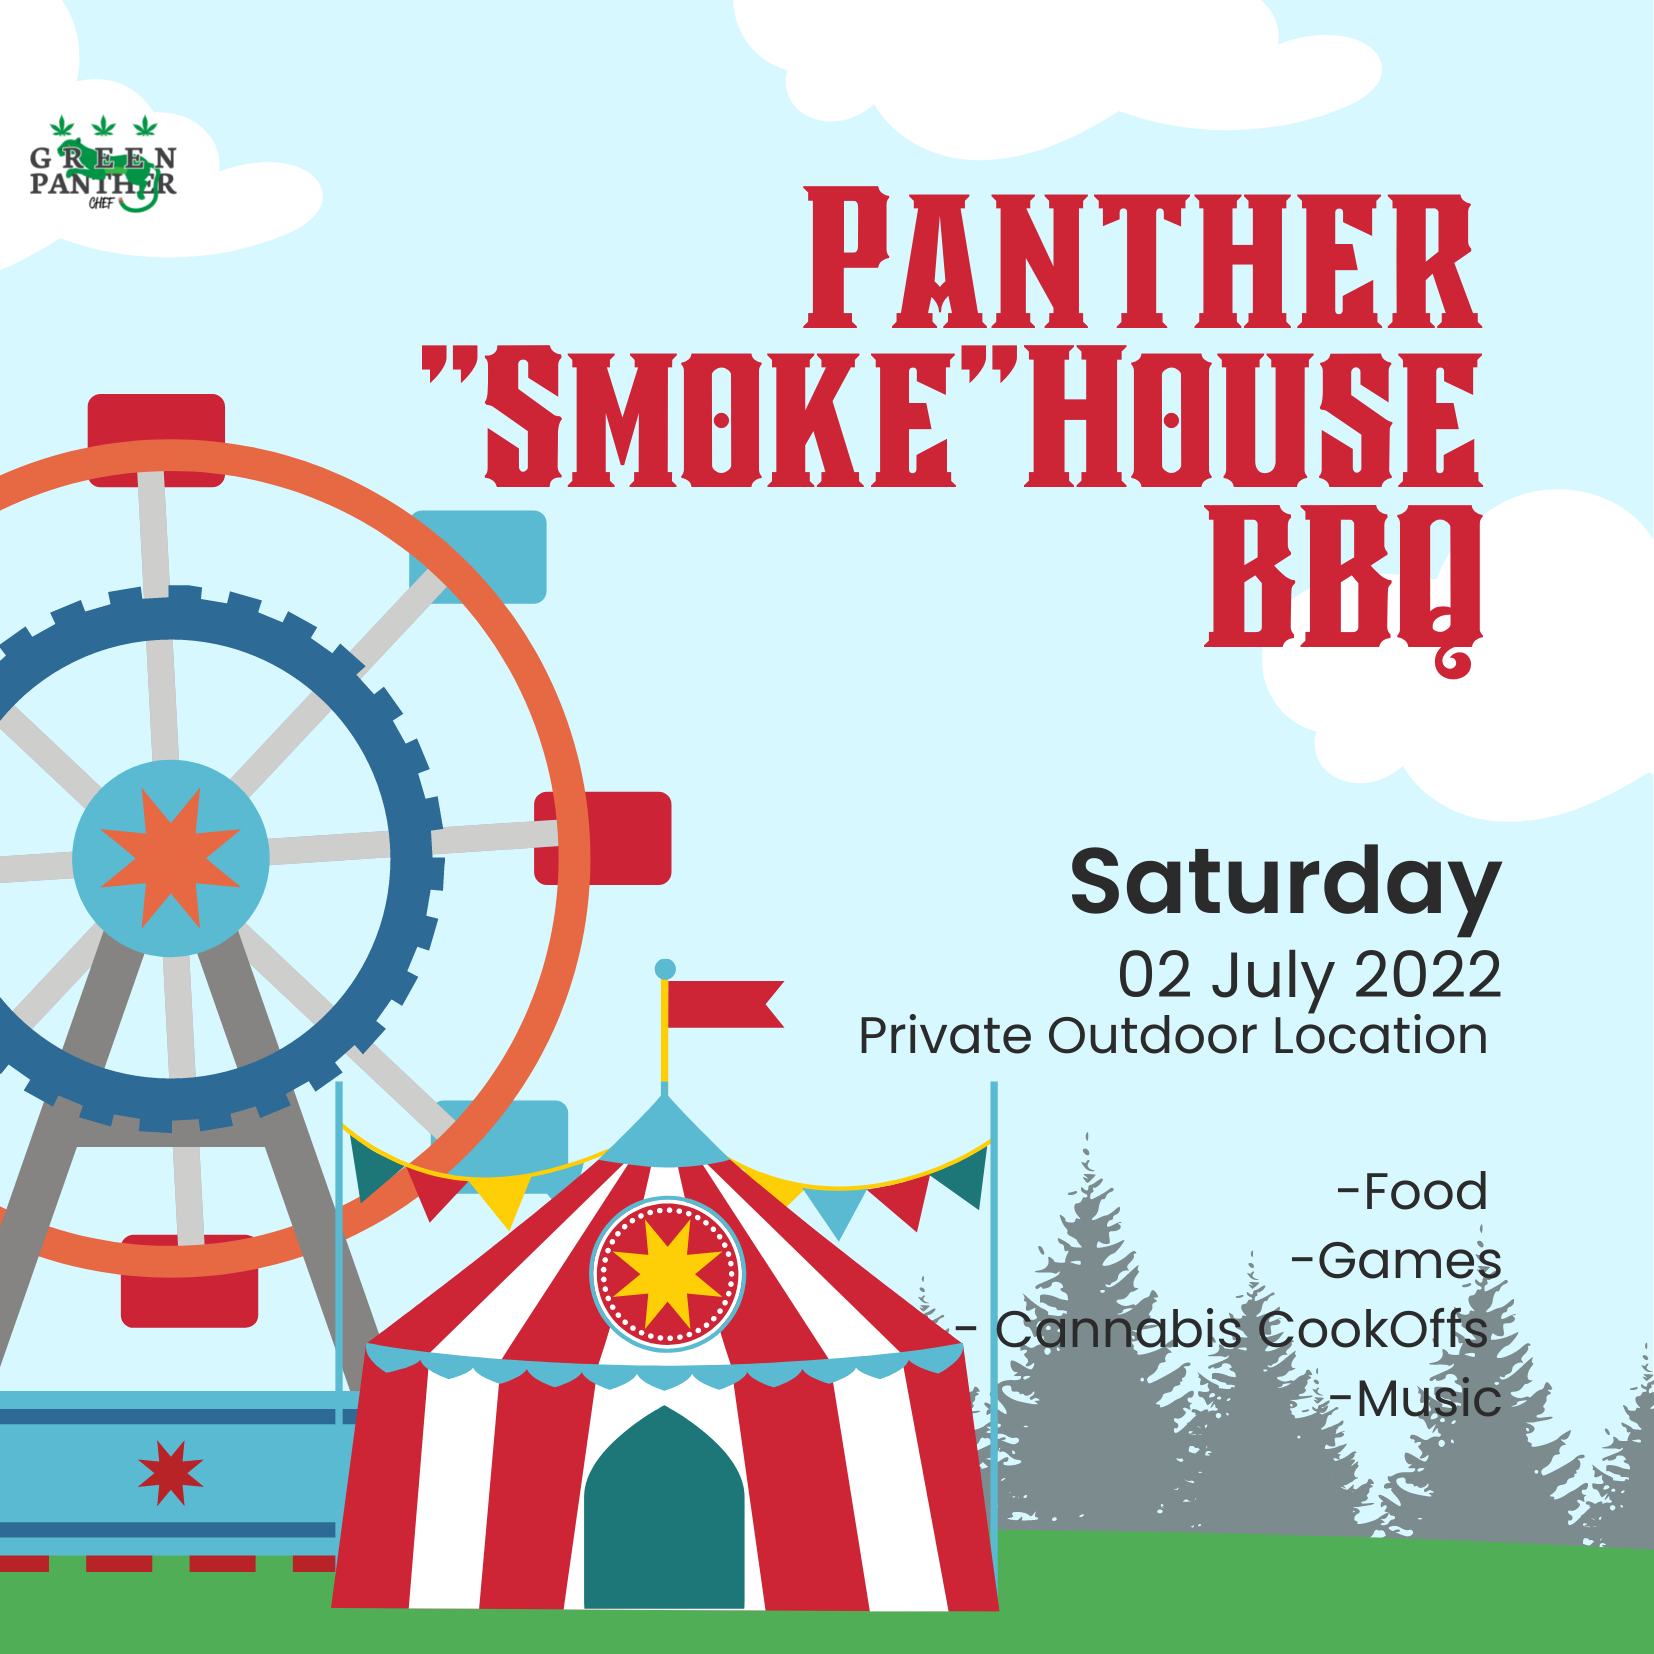 Panther "Smoke"House BBQ